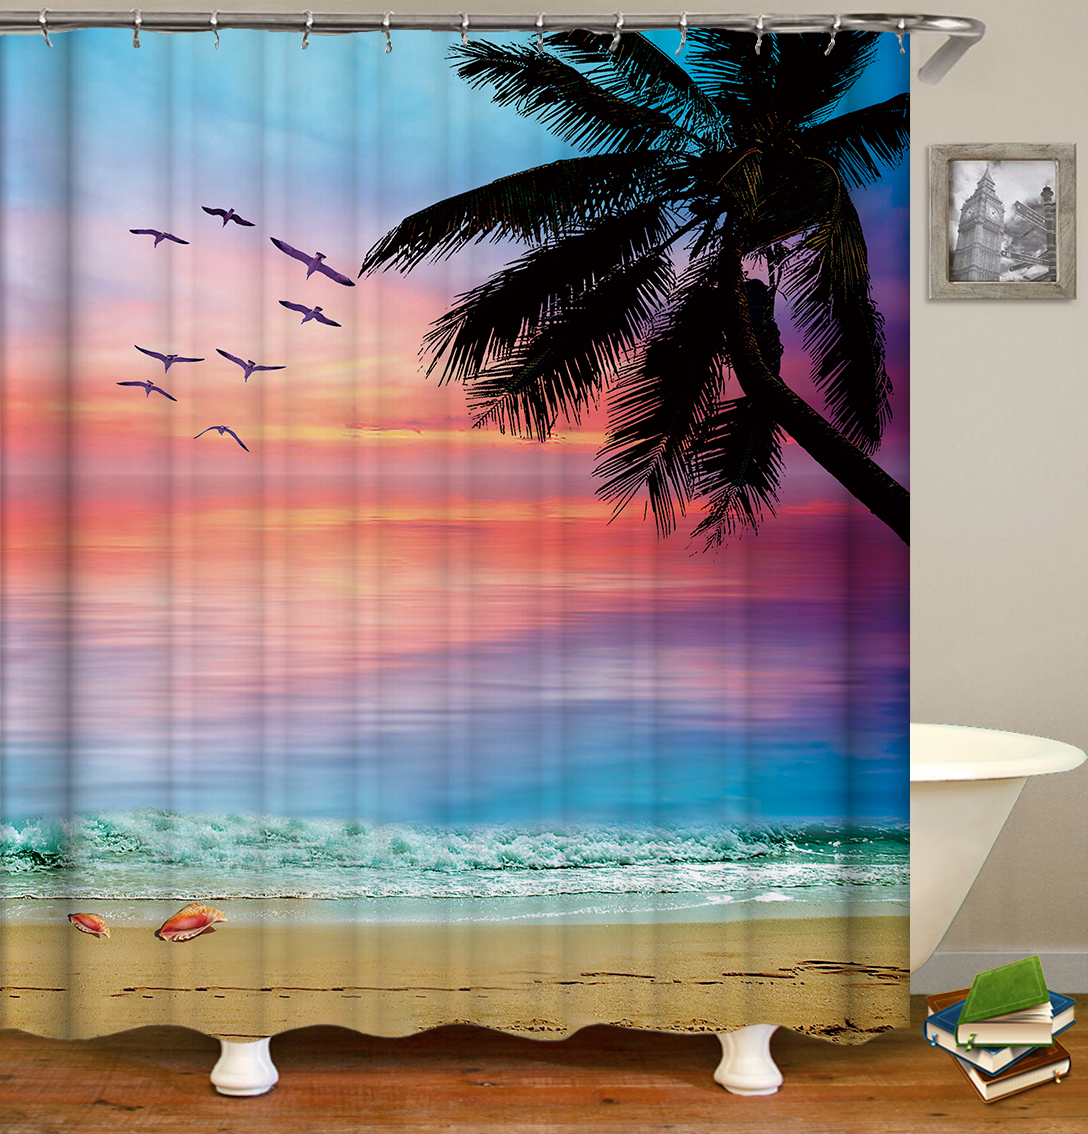 Beach-Sunset-Style-Waterproof-Bathroom-Shower-Curtain-Toilet-Cover-Mat-Non-Slip-Rug-Set-for-Bathroom-1632646-4